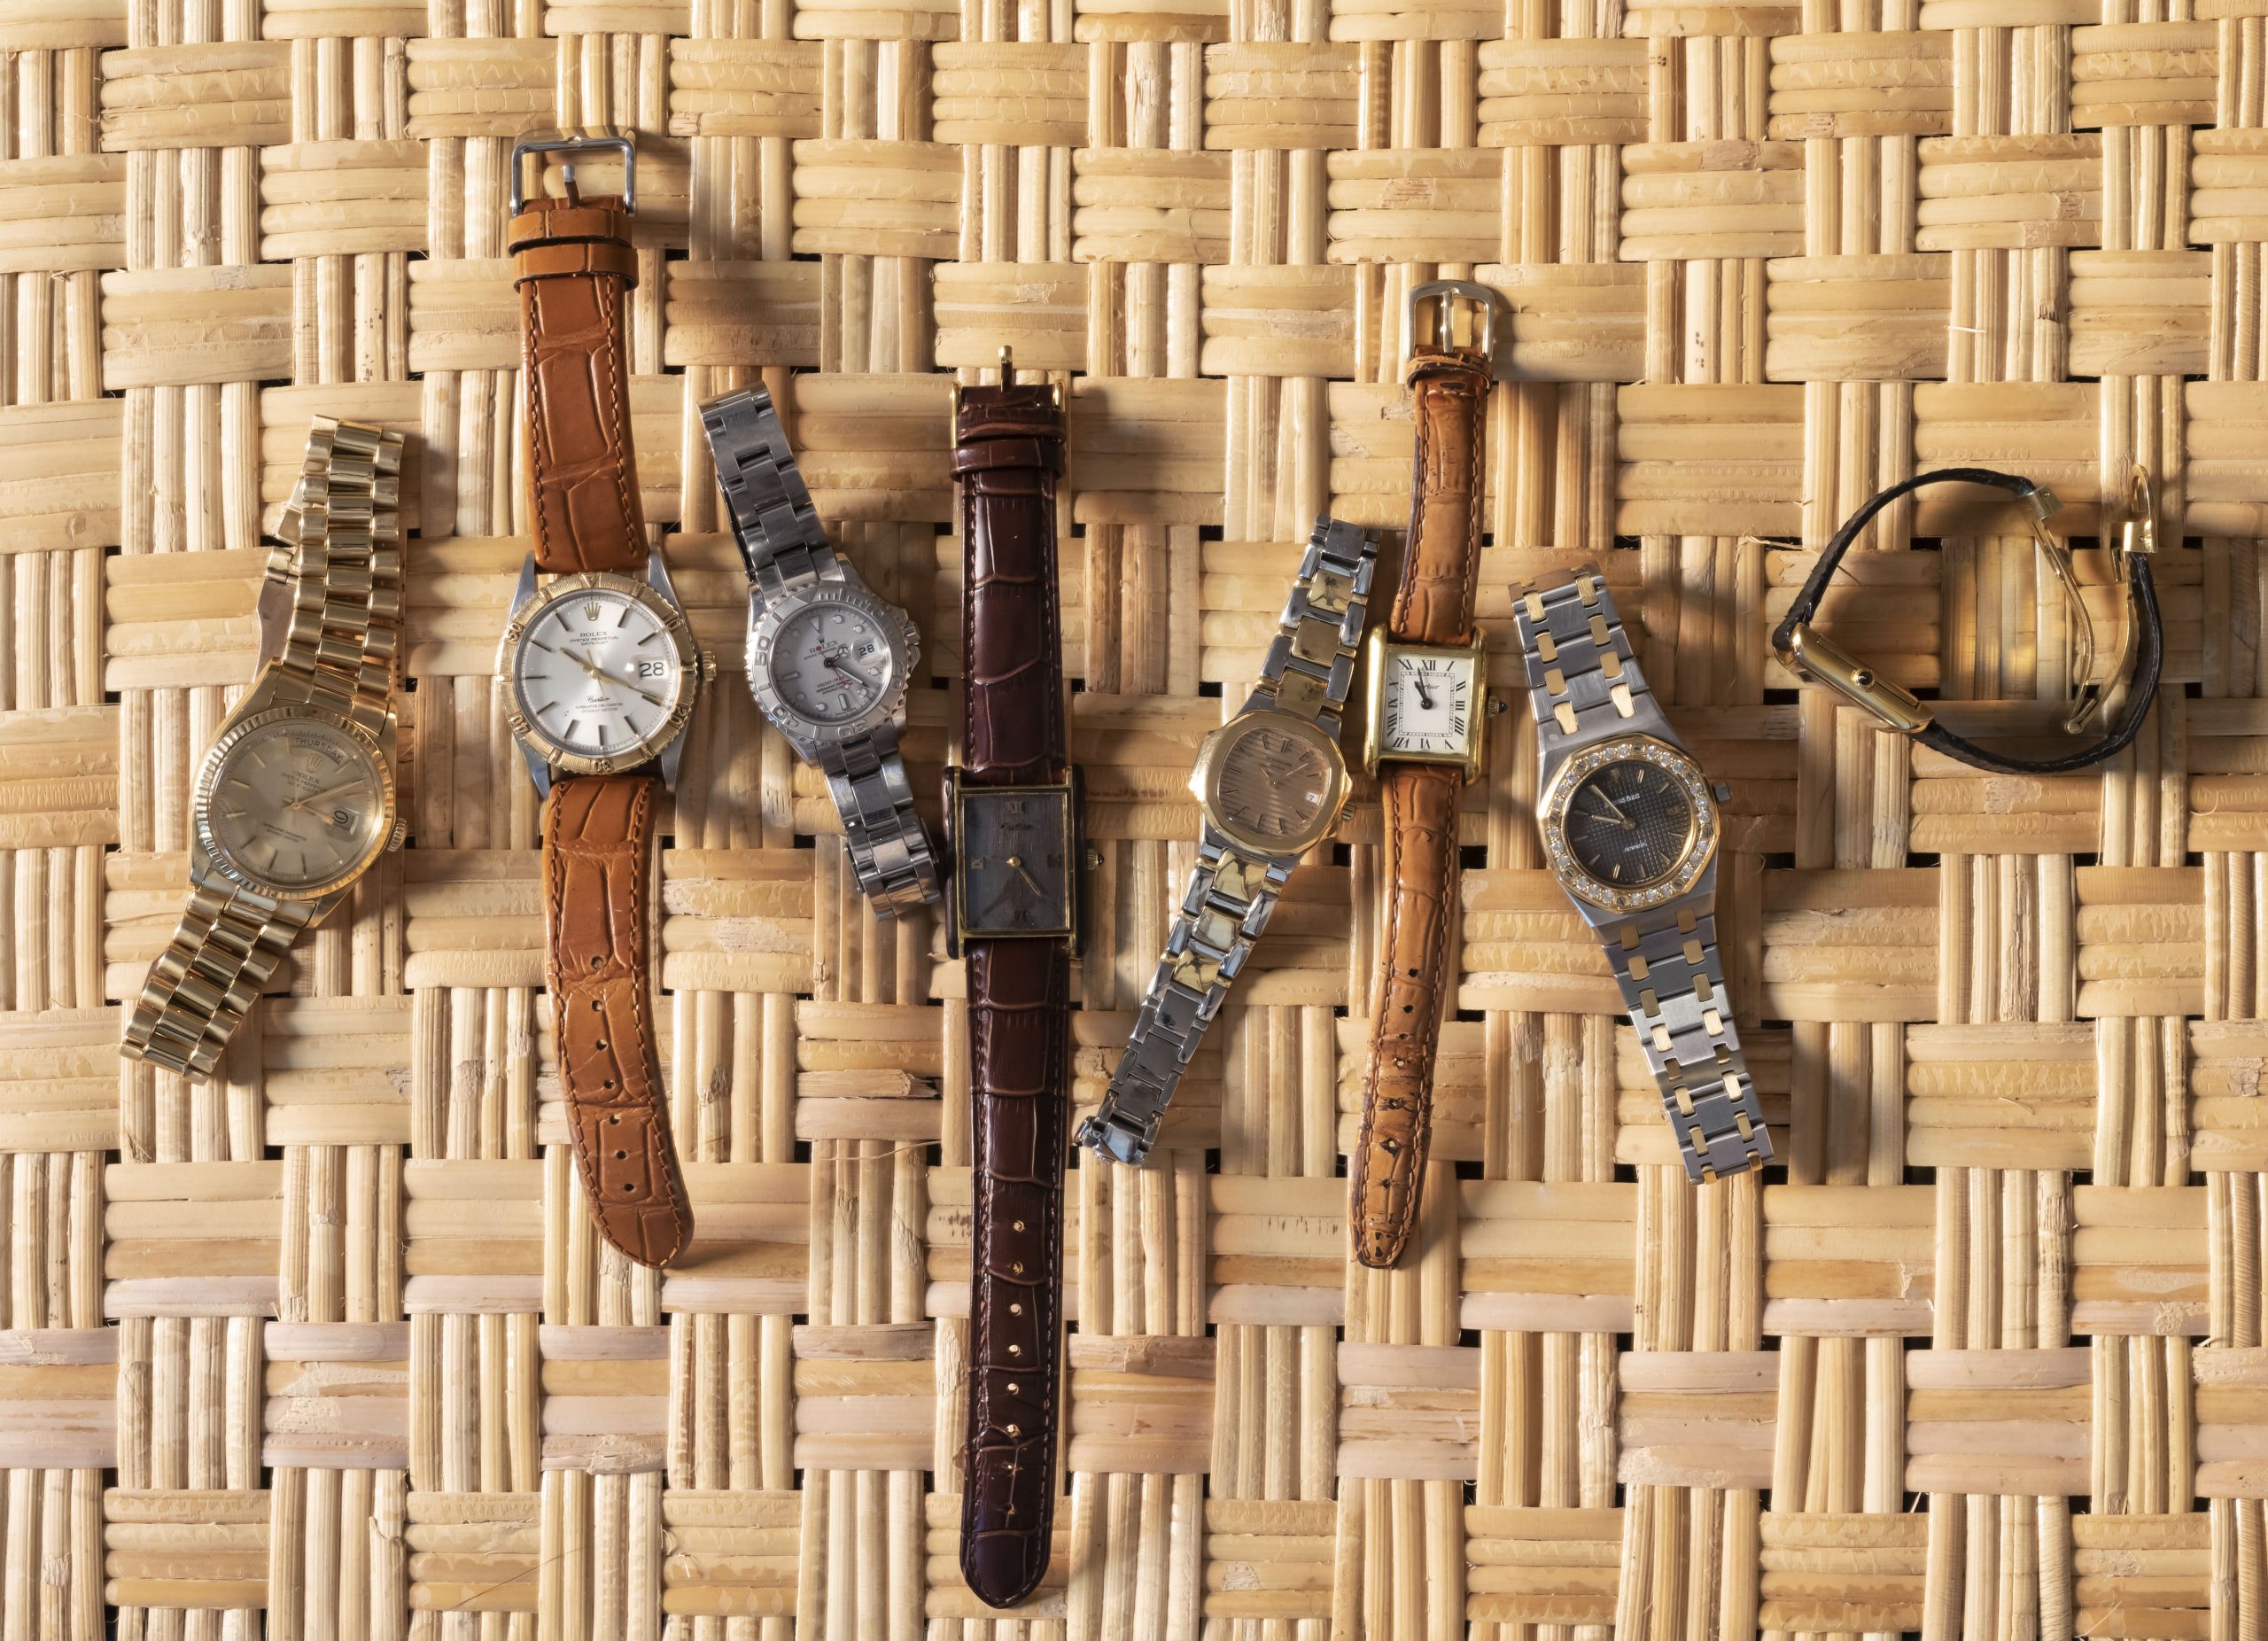 Rolex, Cartier, Patek Philippe and Audemars Piguet watches